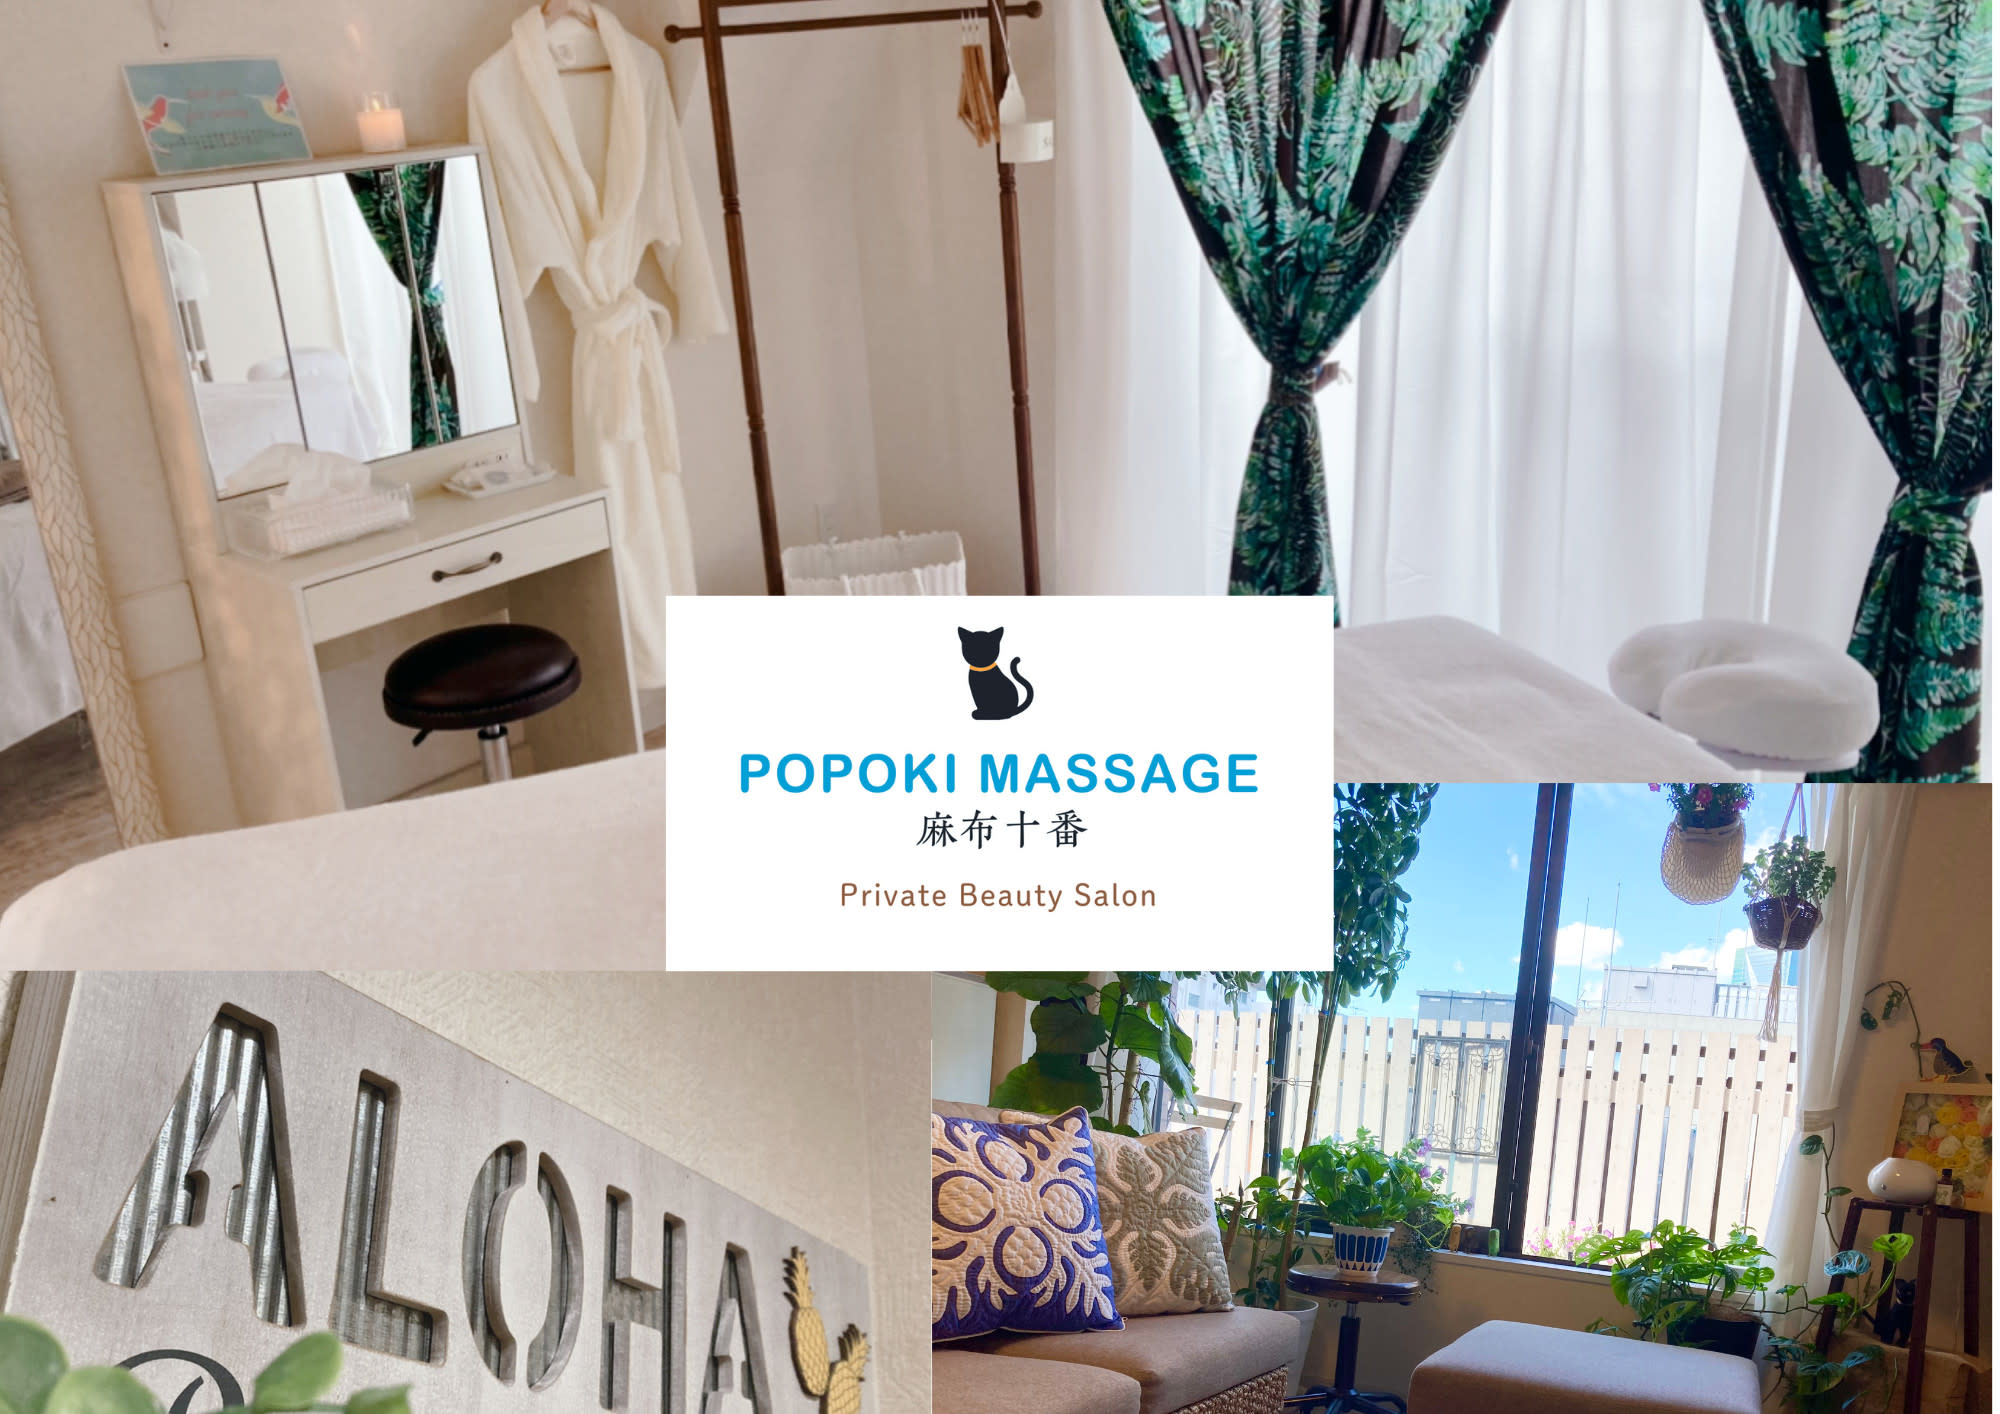 POPOKI MASSAGE 麻布十番 Private Beauty Salonのアイキャッチ画像